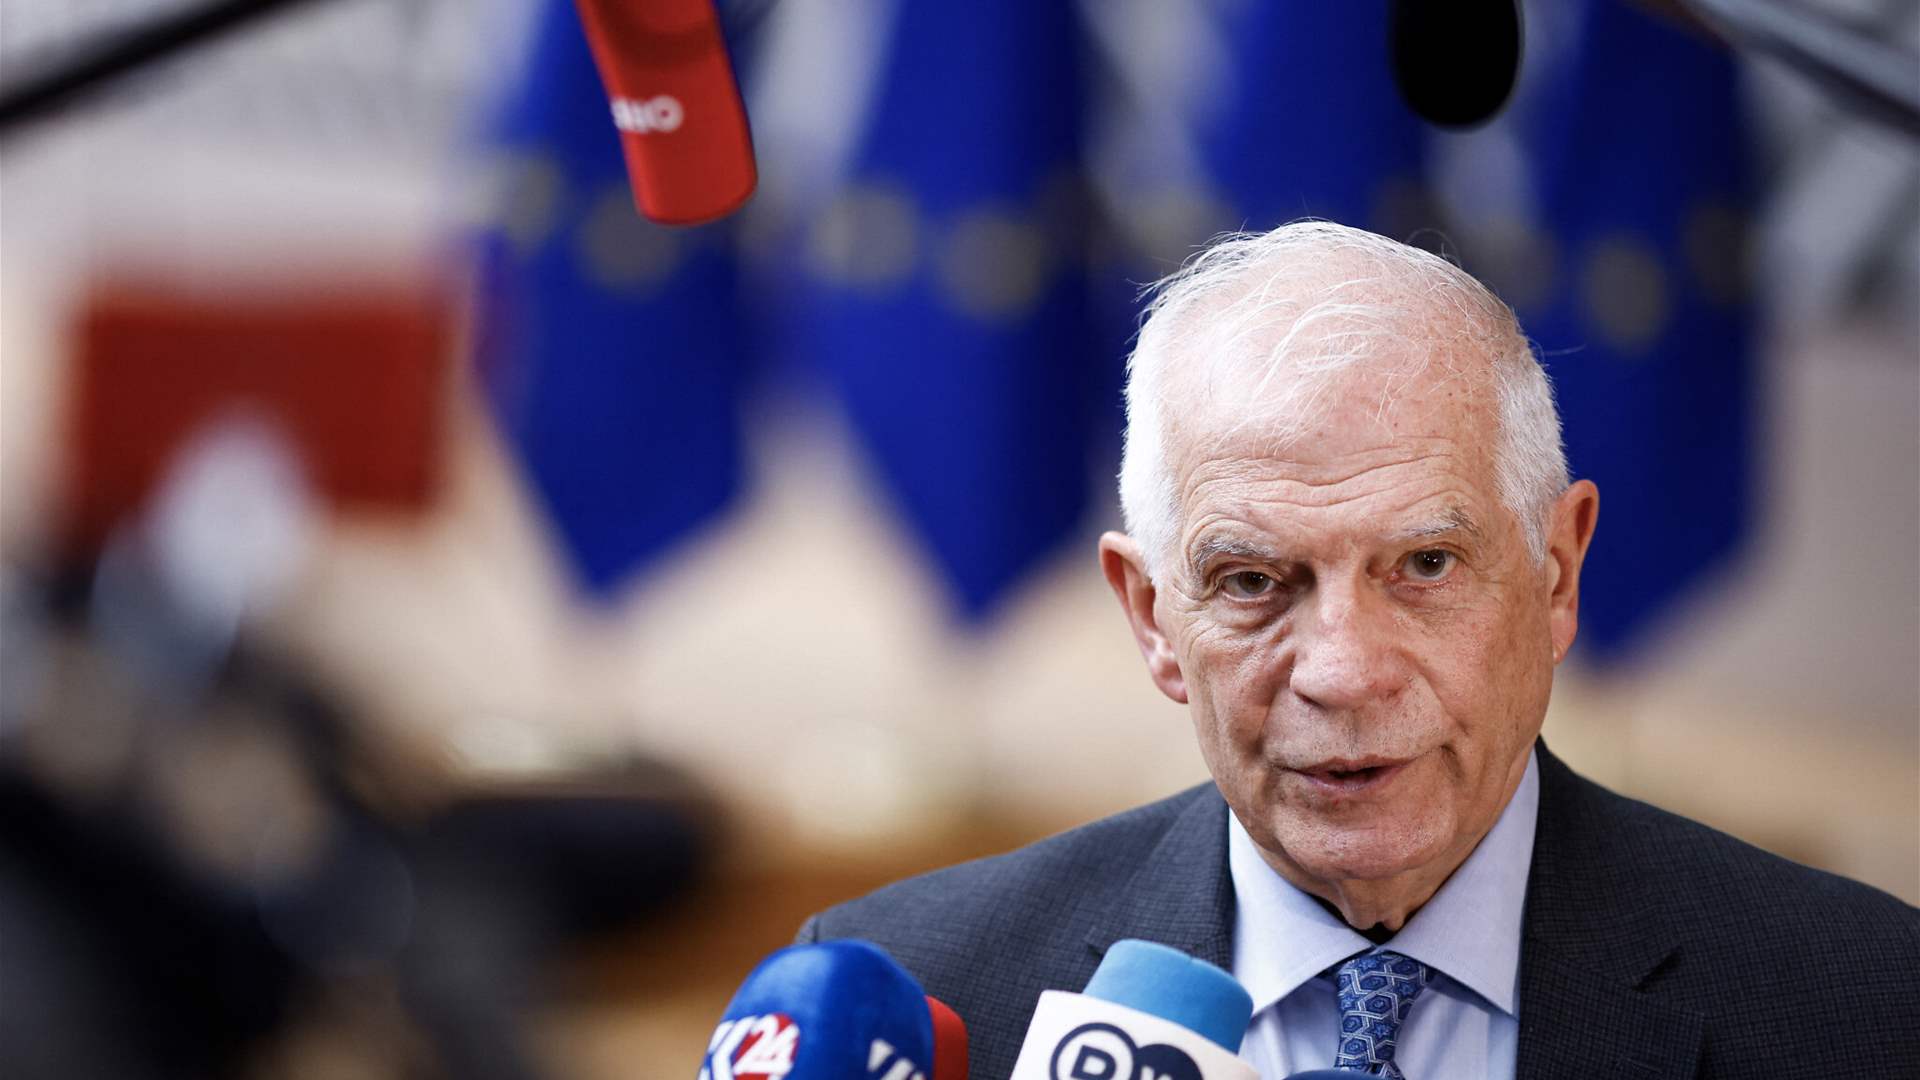 EU reaches agreement on further sanctions against Hamas, Israeli settlers: Borrell says